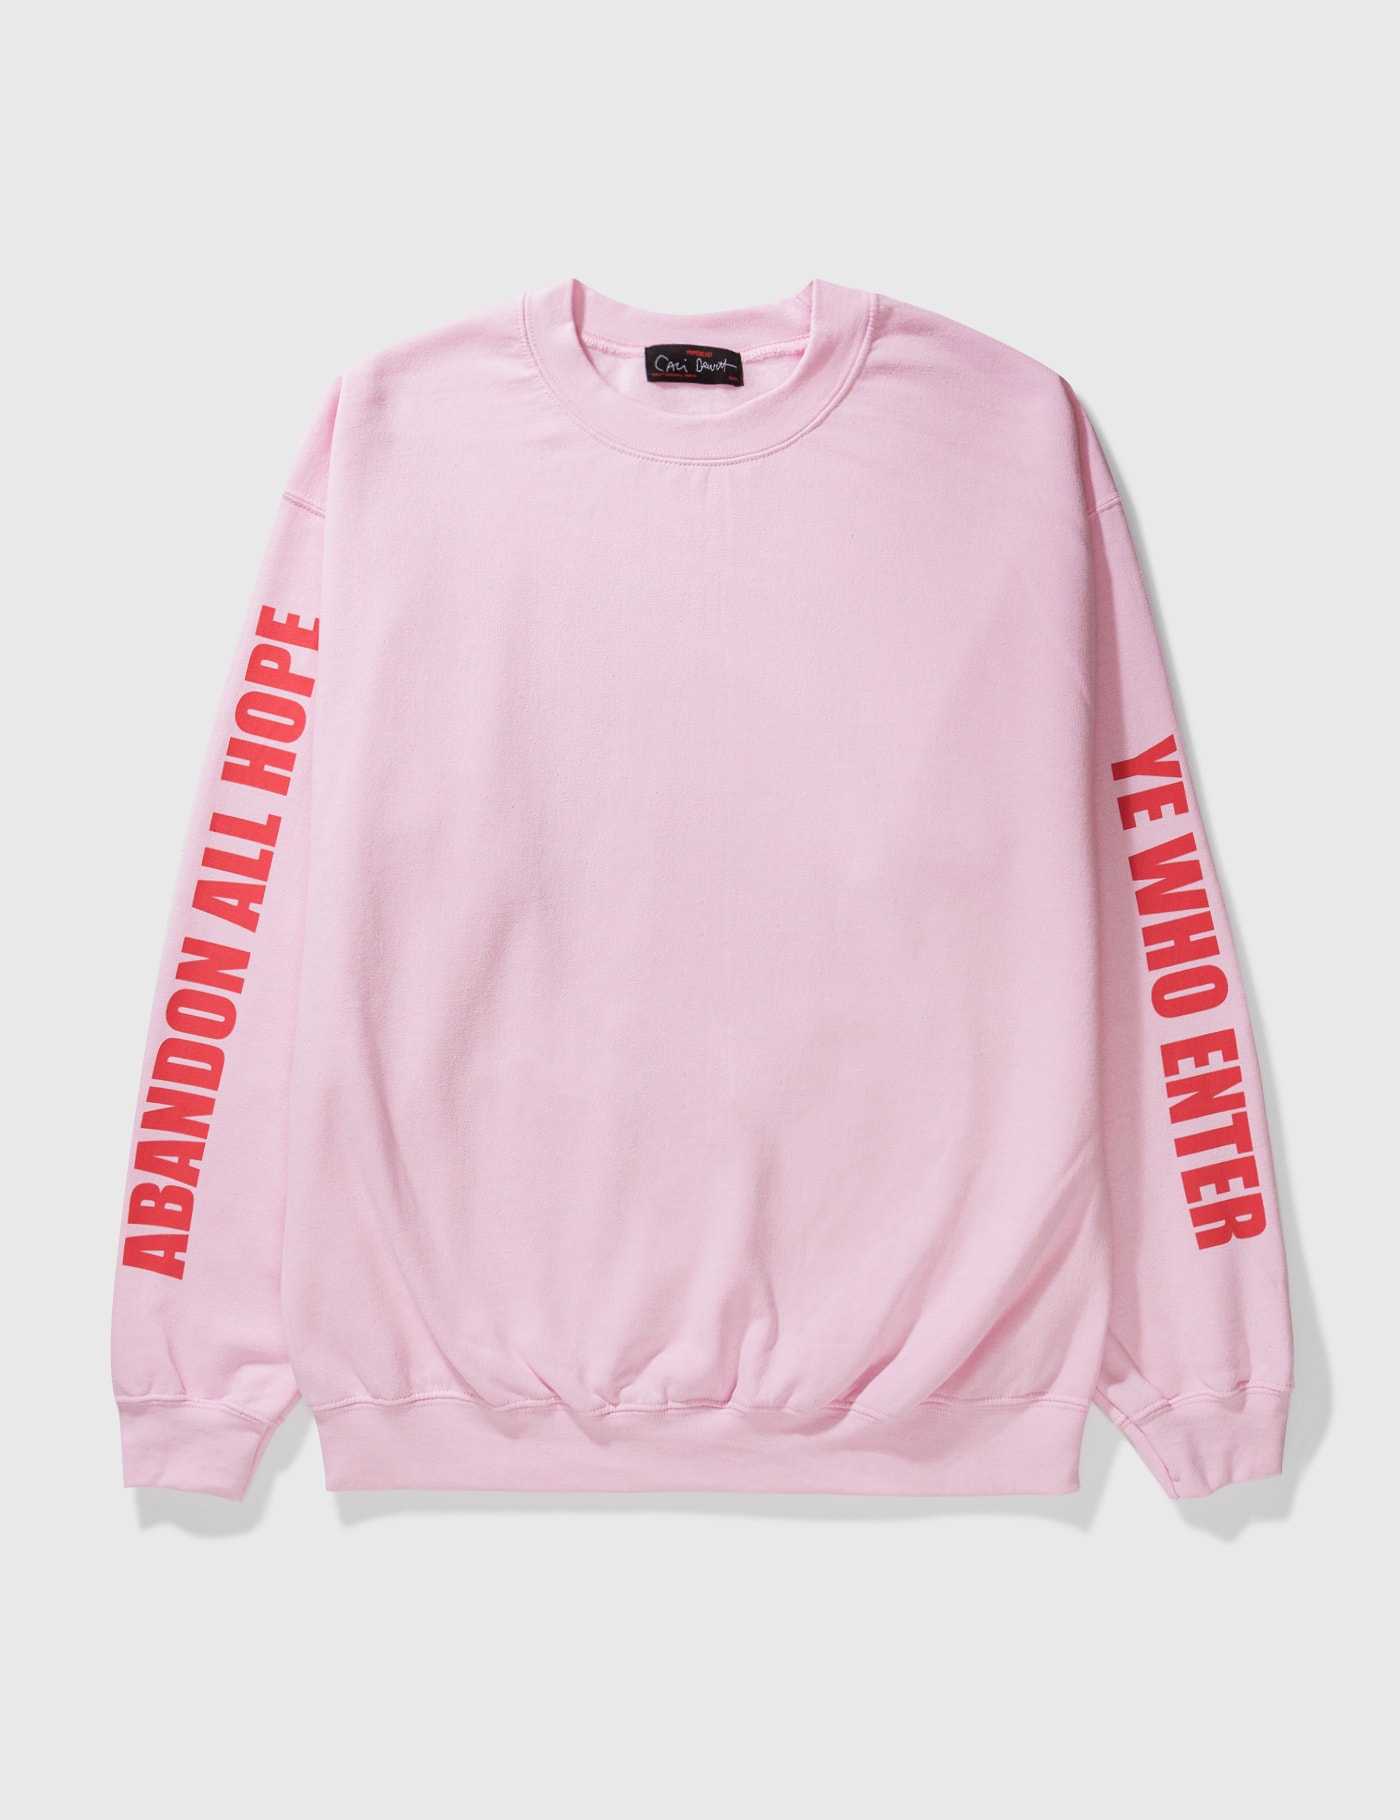 Hypebeast Cali Thornhill Dewitt X  Sweatshirt In Pink